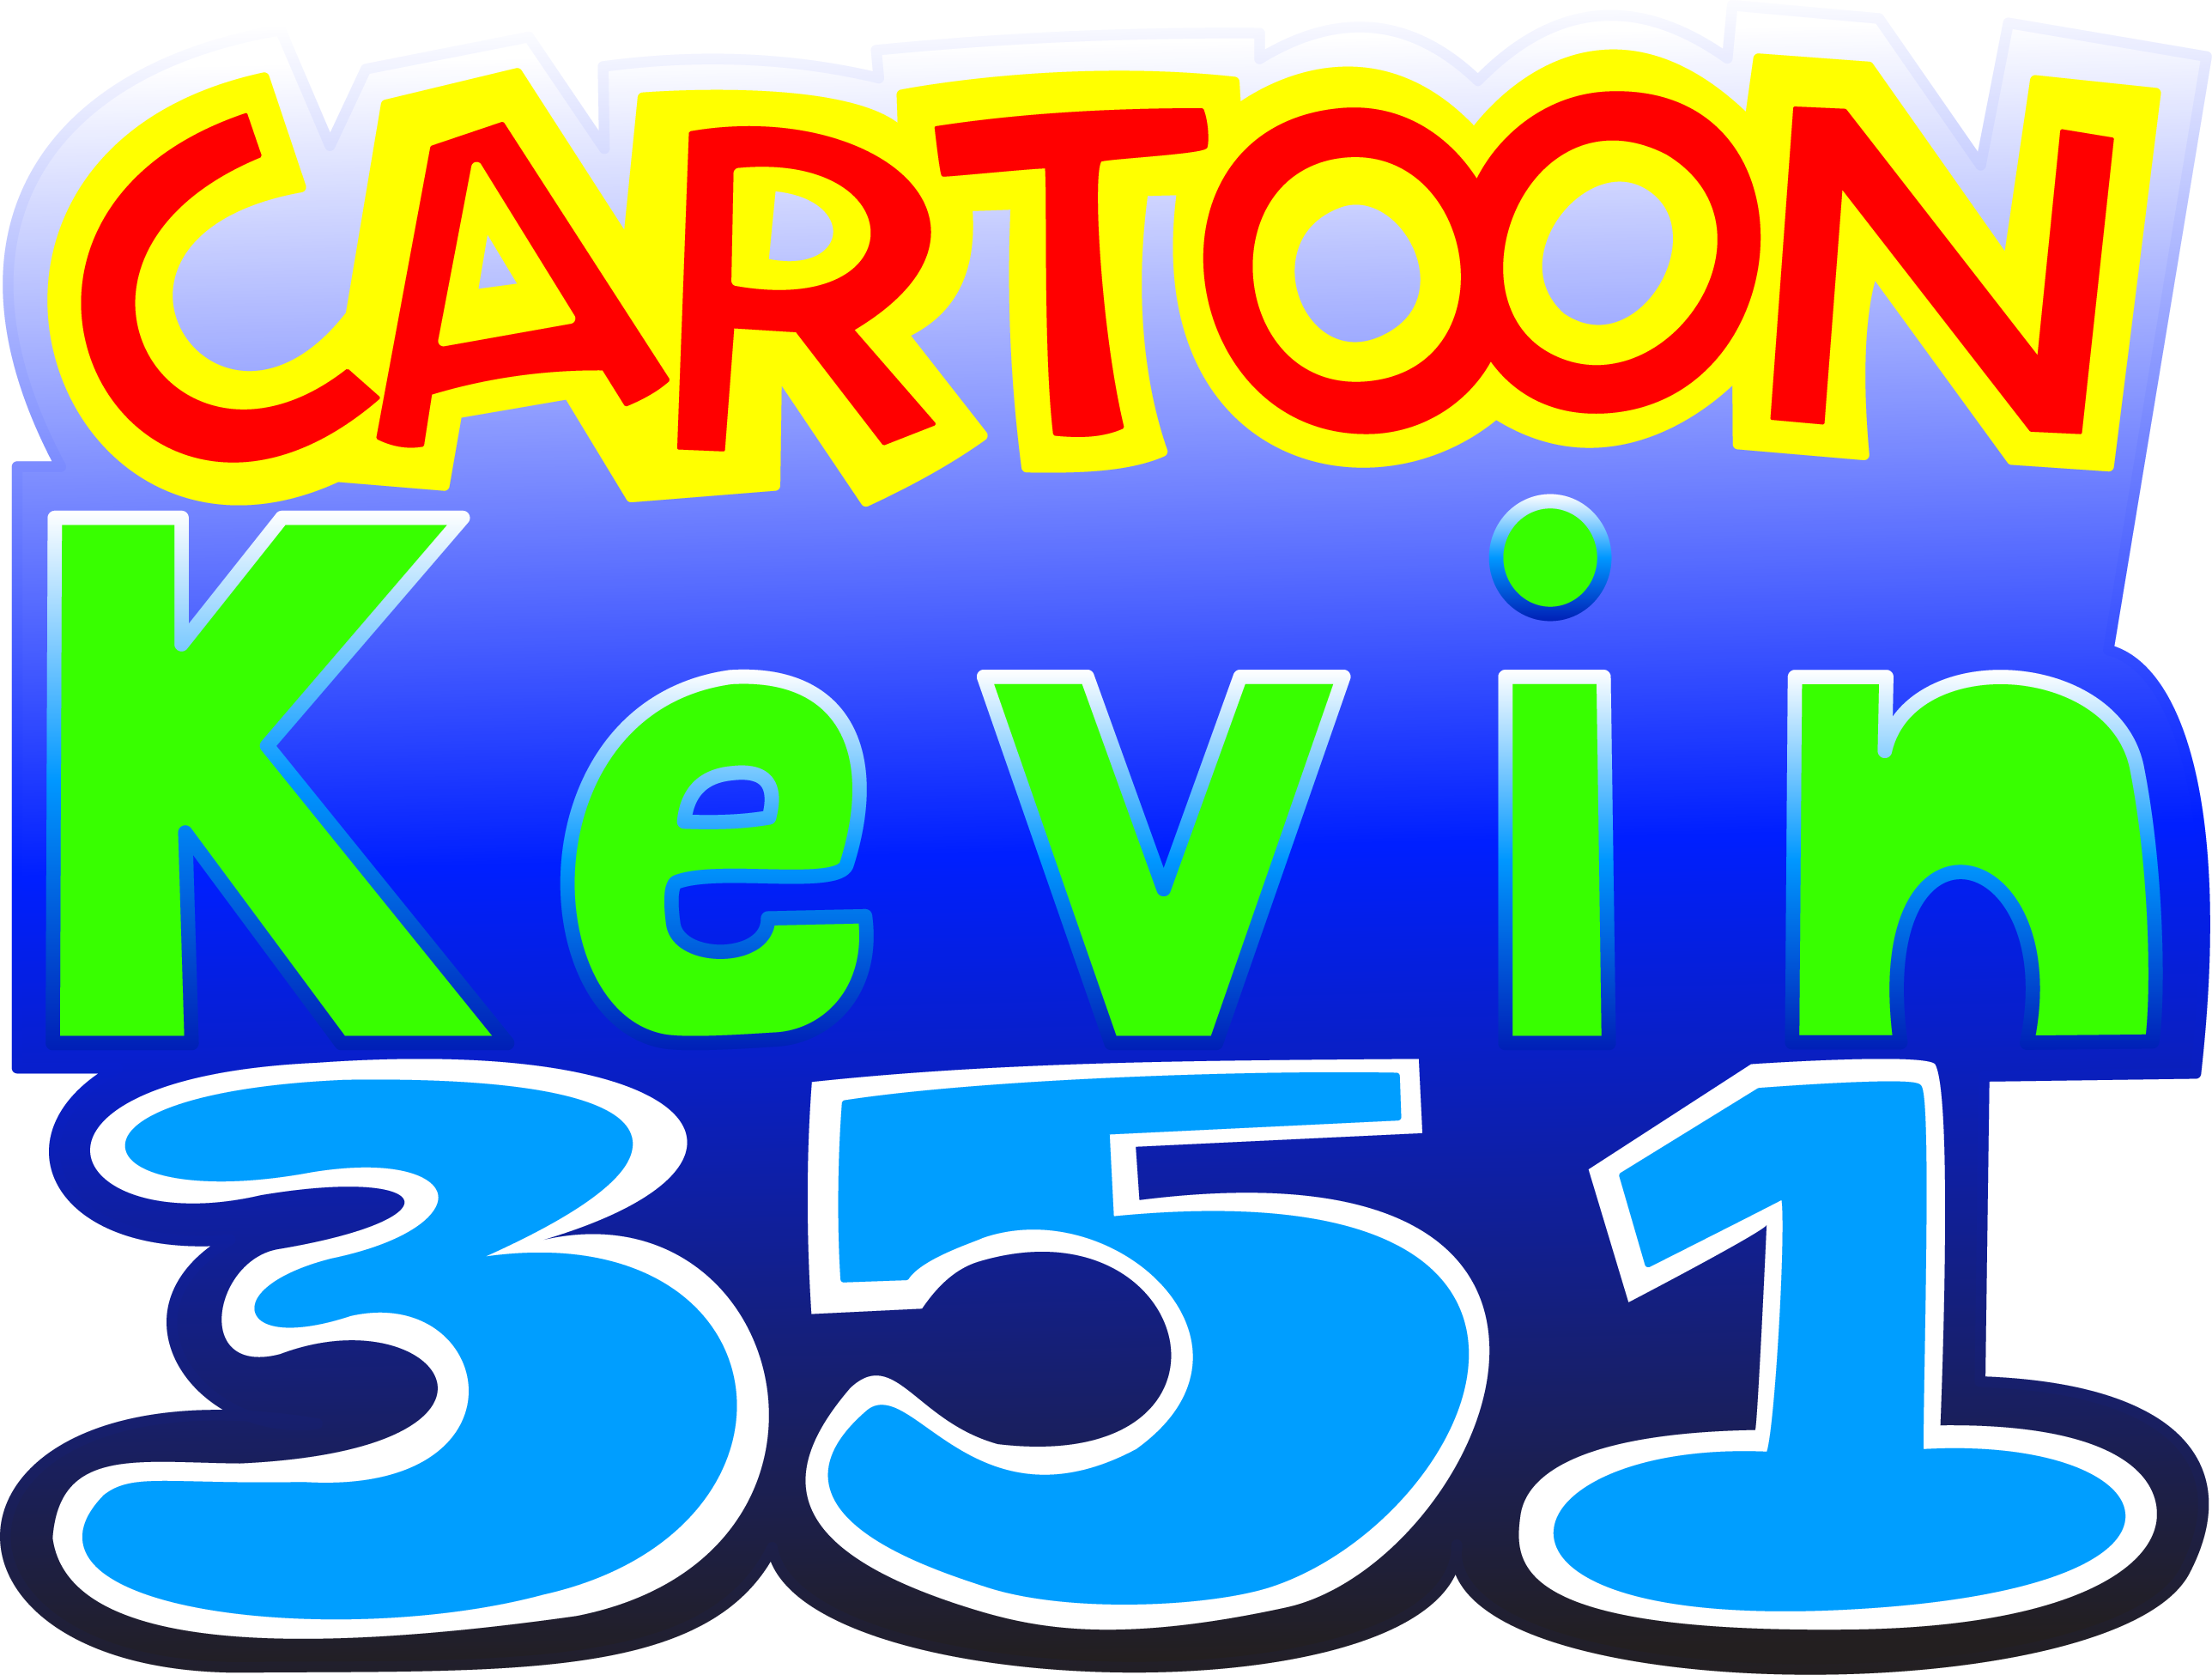 CartoonKevin351